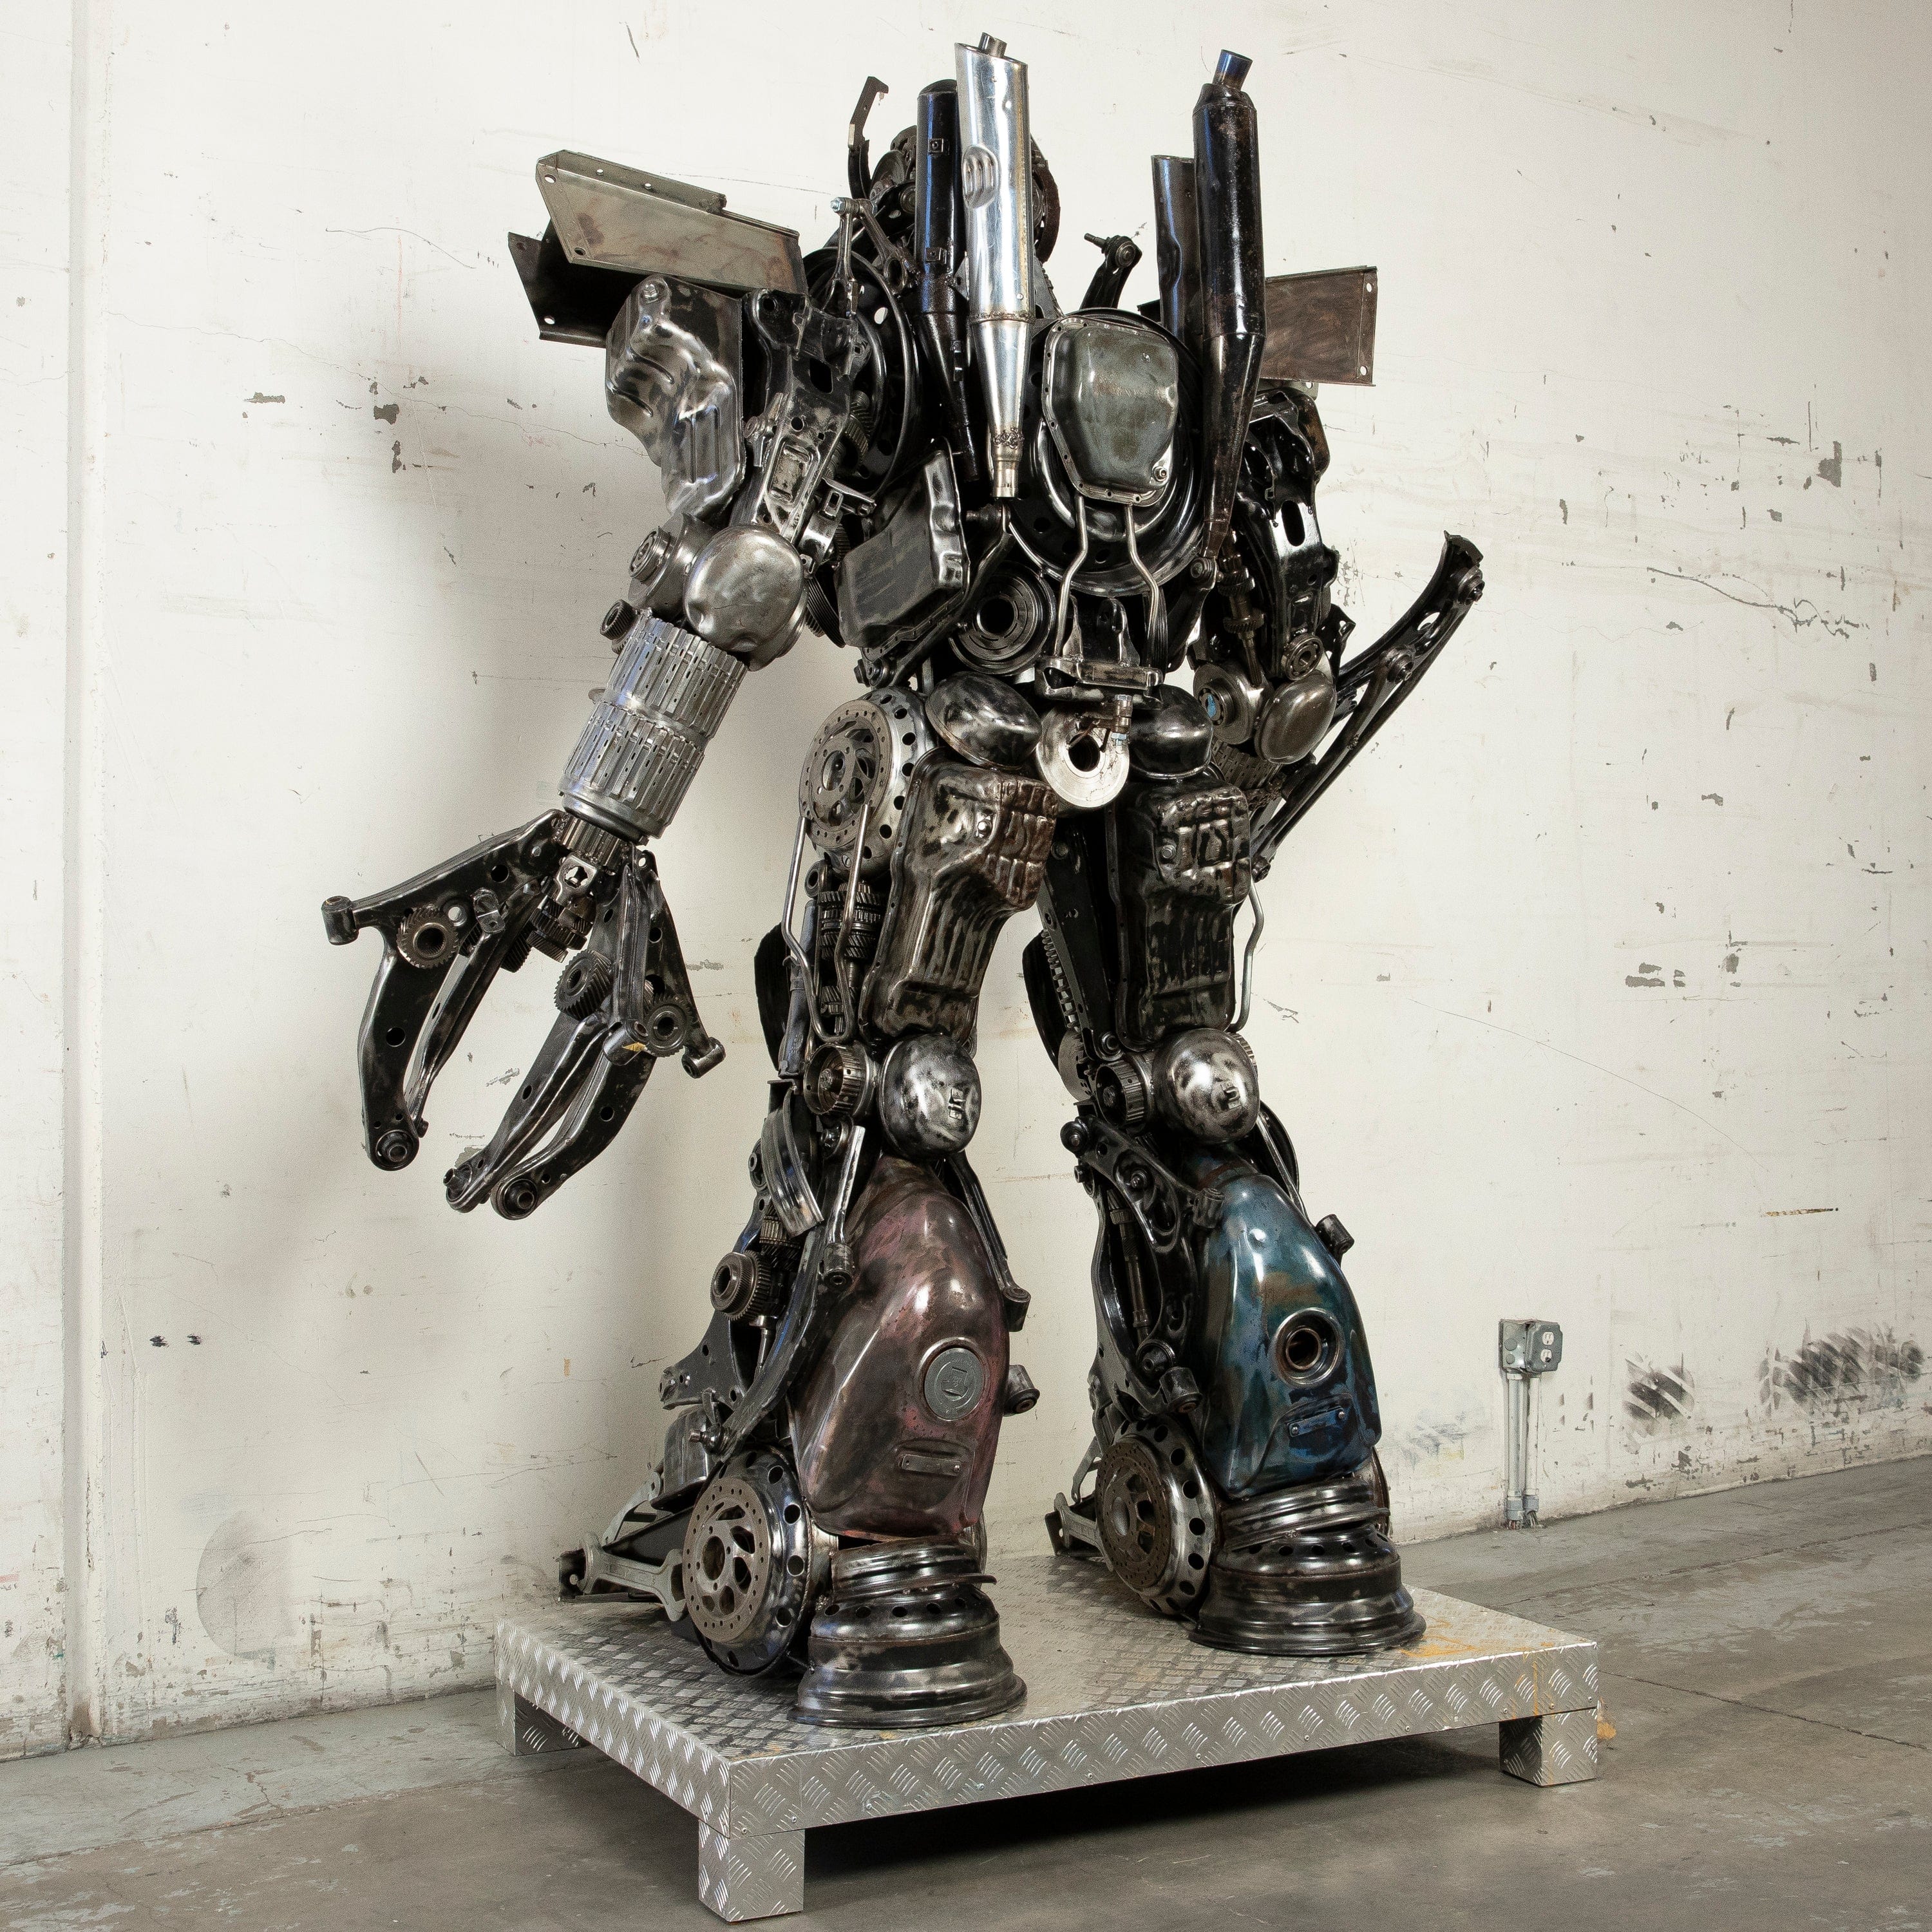 Kalifano Recycled Metal Art 91" Megatron Inspired Recycled Metal Art Sculpture RMS-MEG230-S05